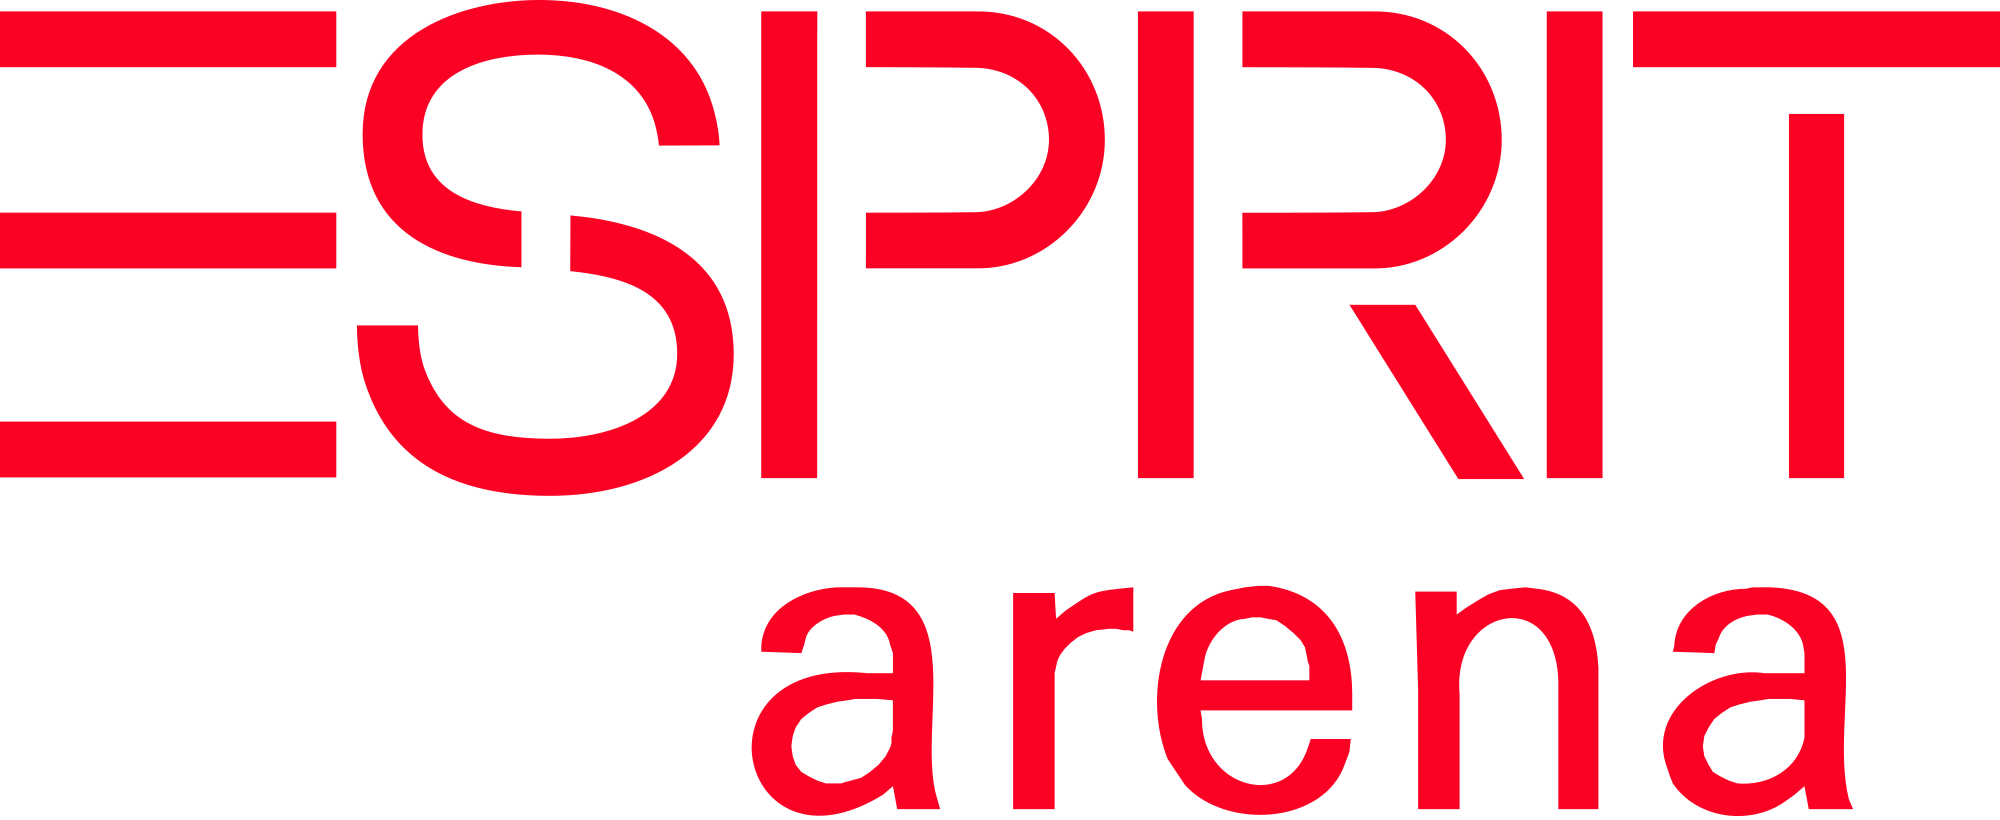 Esprit Logo - Esprit Arena logo.svg